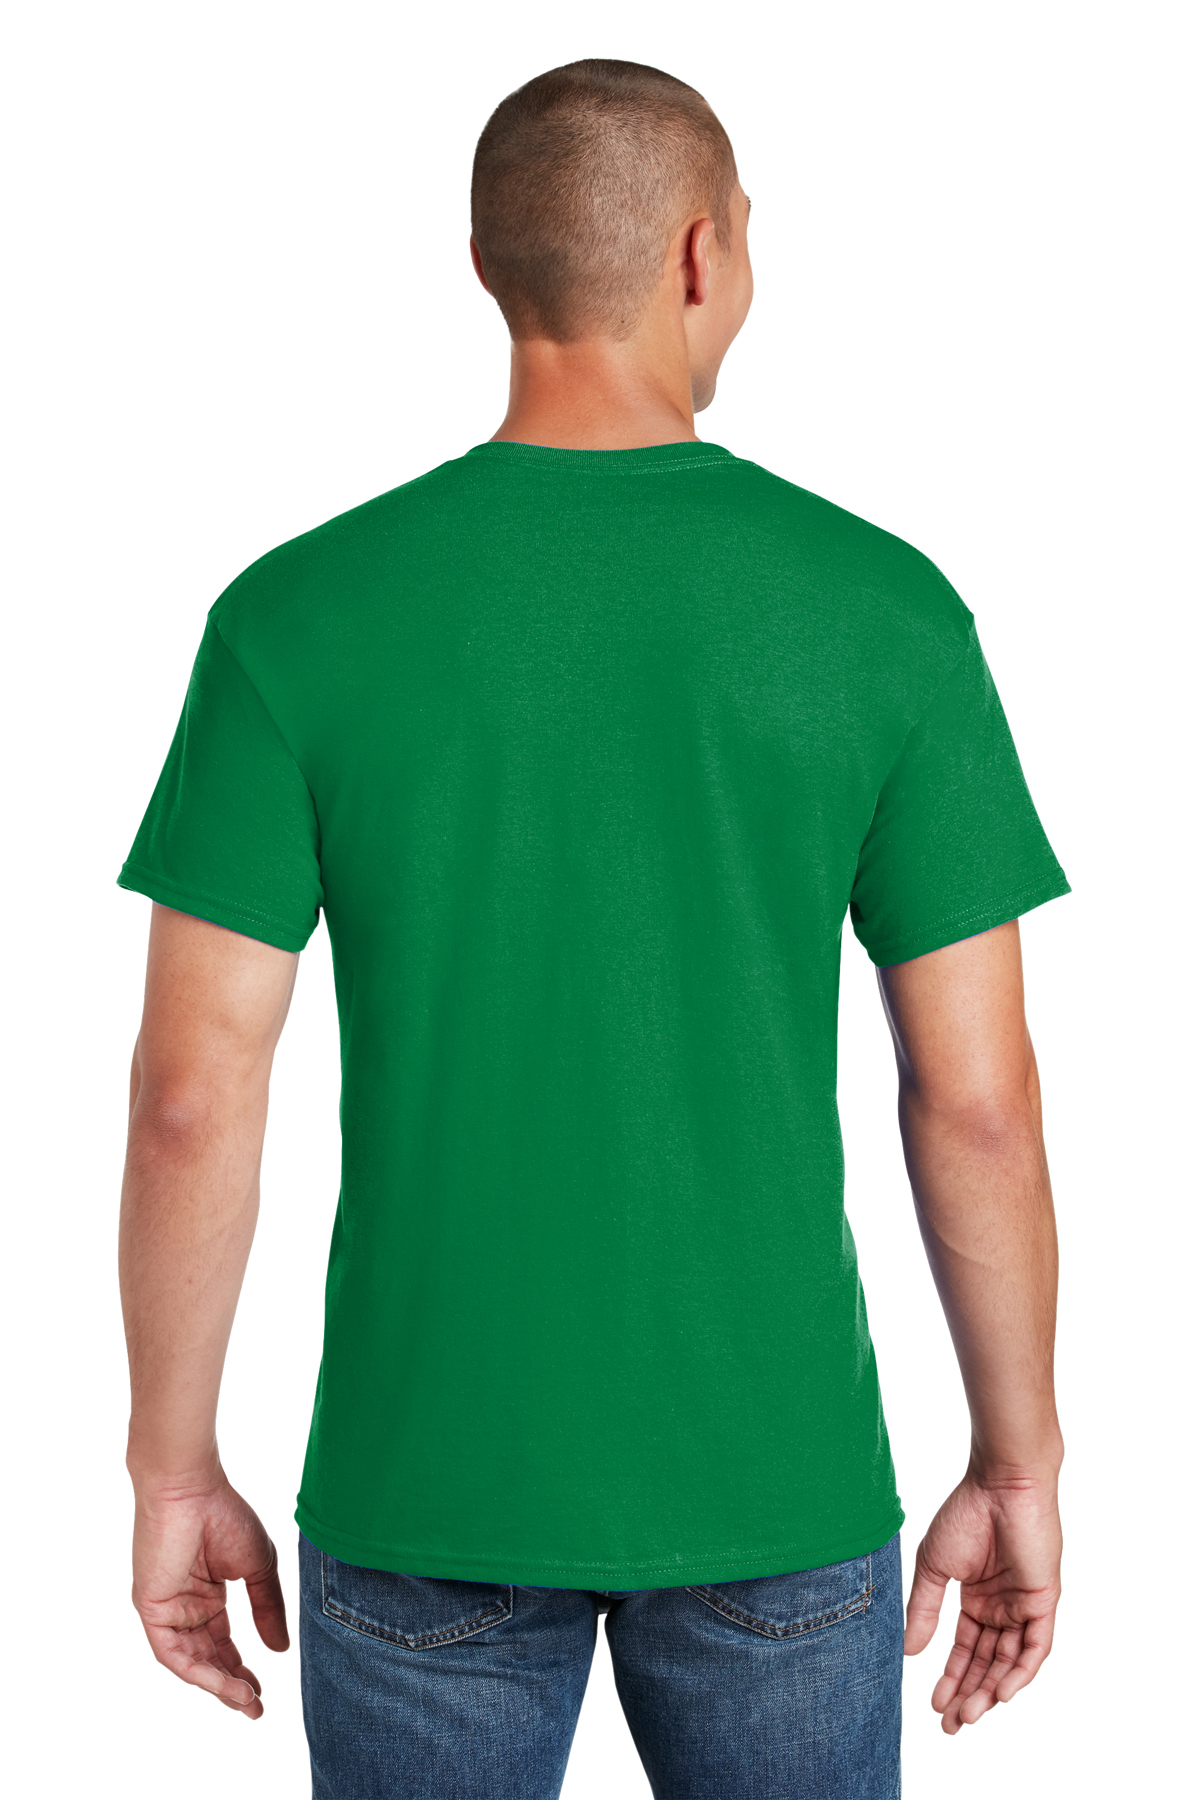 Gildan G8000 50% Cotton 50% Polyester DryBlend T-Shirt Kelly Green Medium 2 Pack 